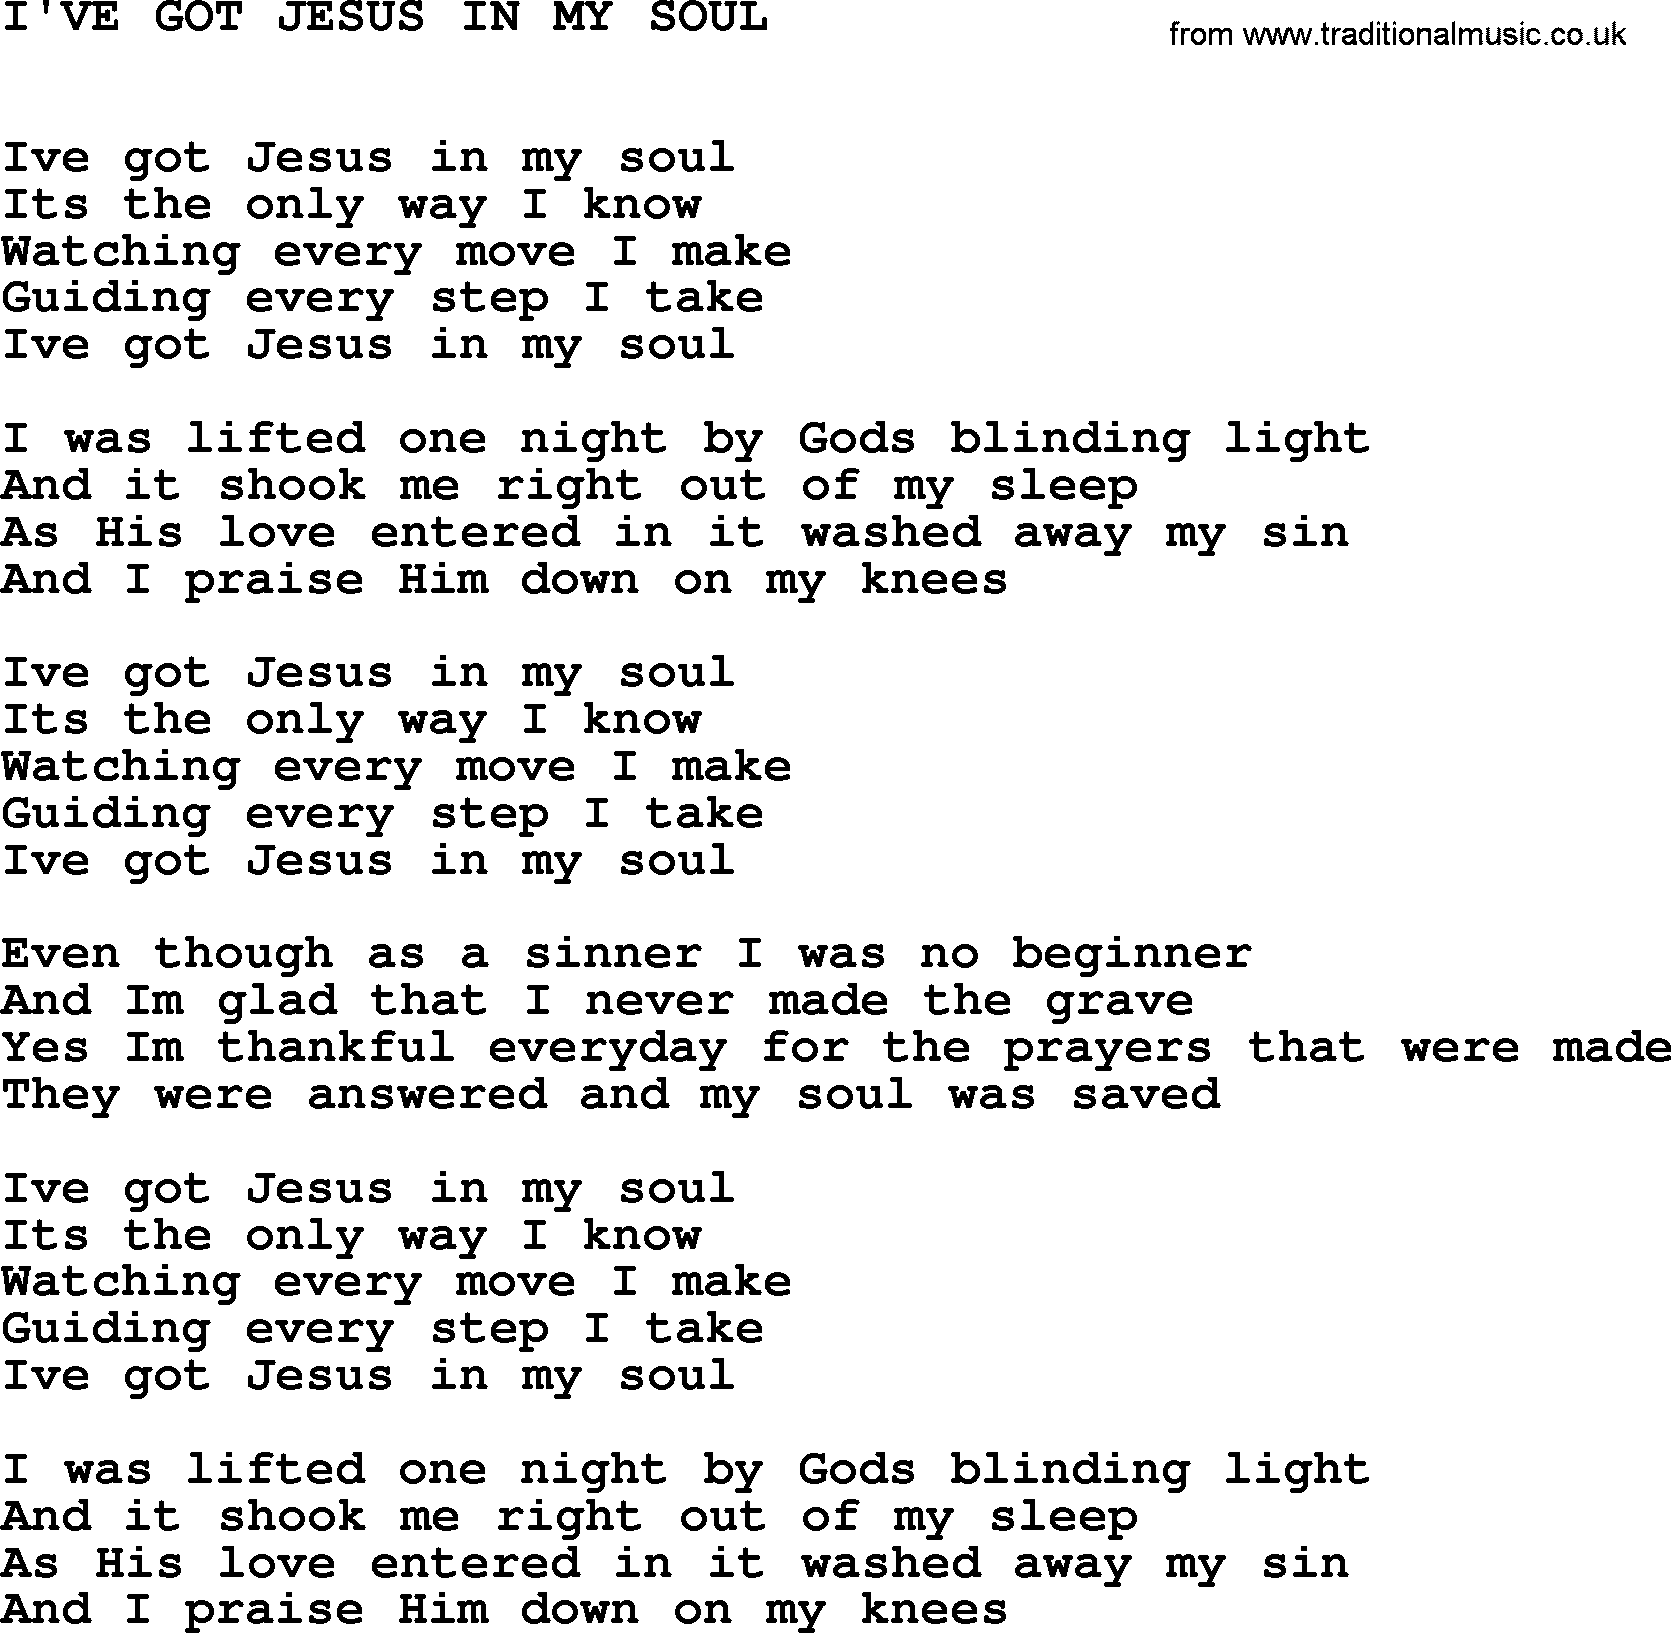 Johnny Cash song I've Got Jesus In My Soul.txt lyrics